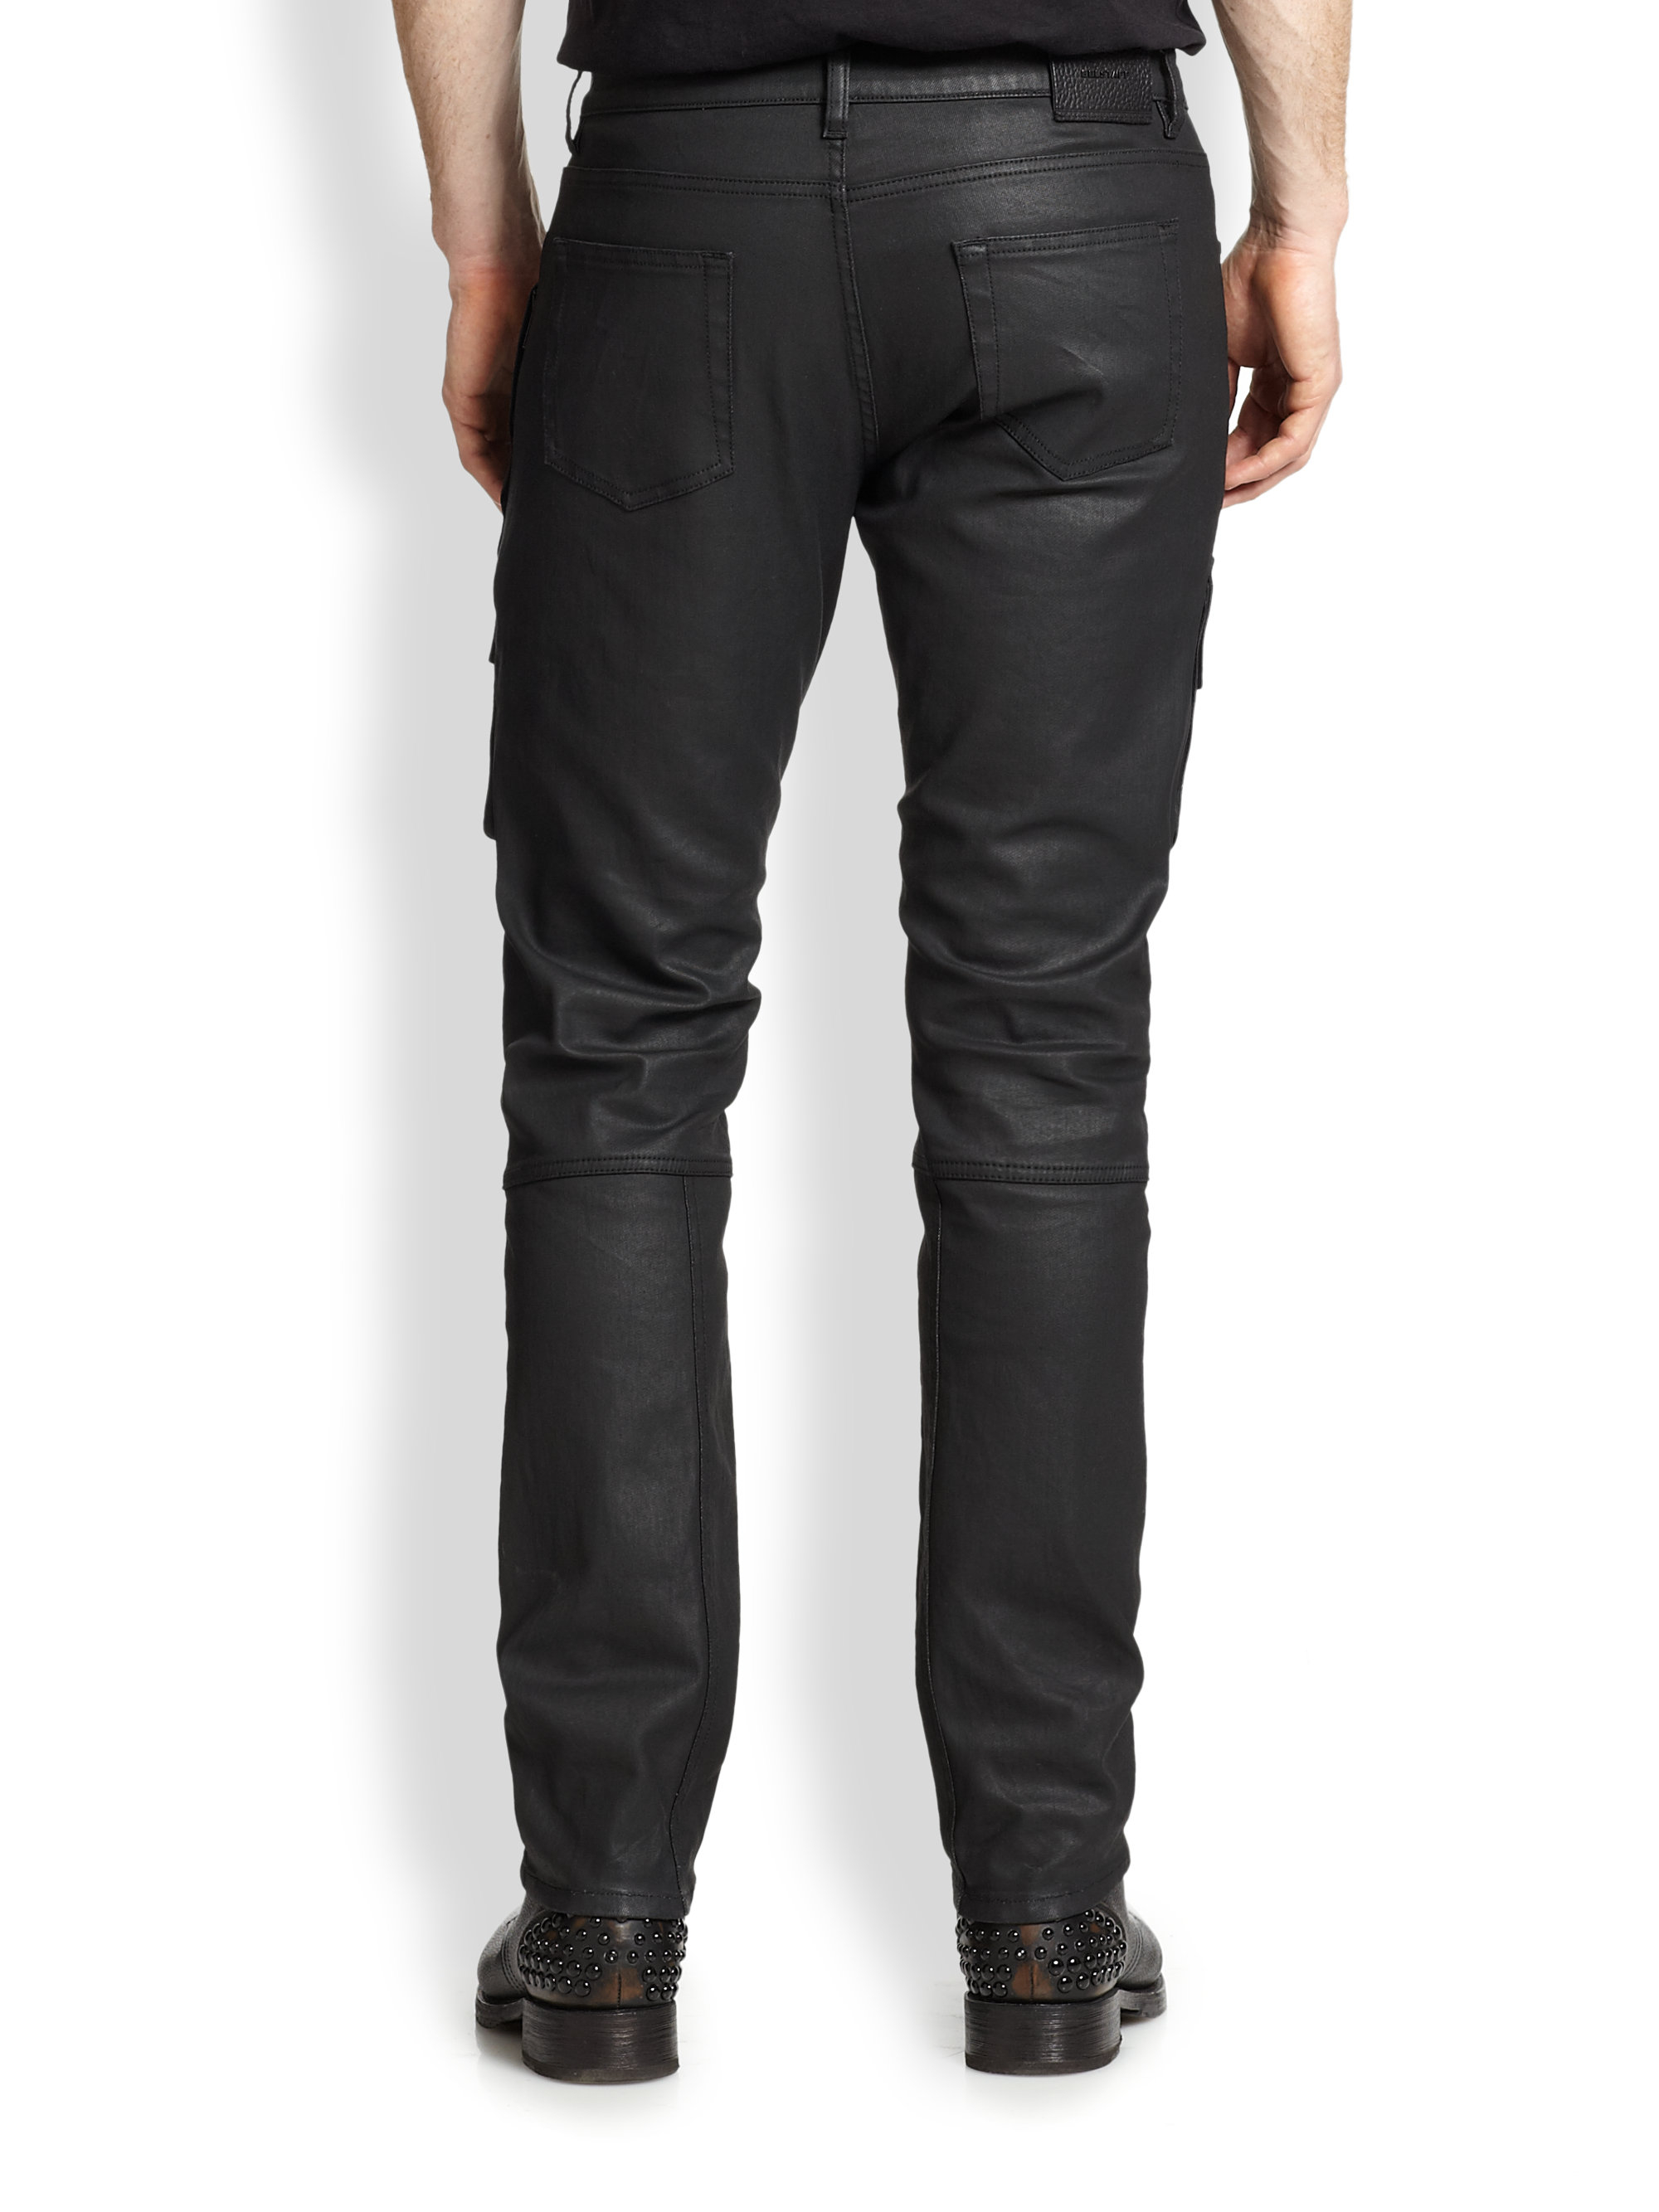 Belstaff Resin-coated Moto Jeans in Black for Men - Lyst